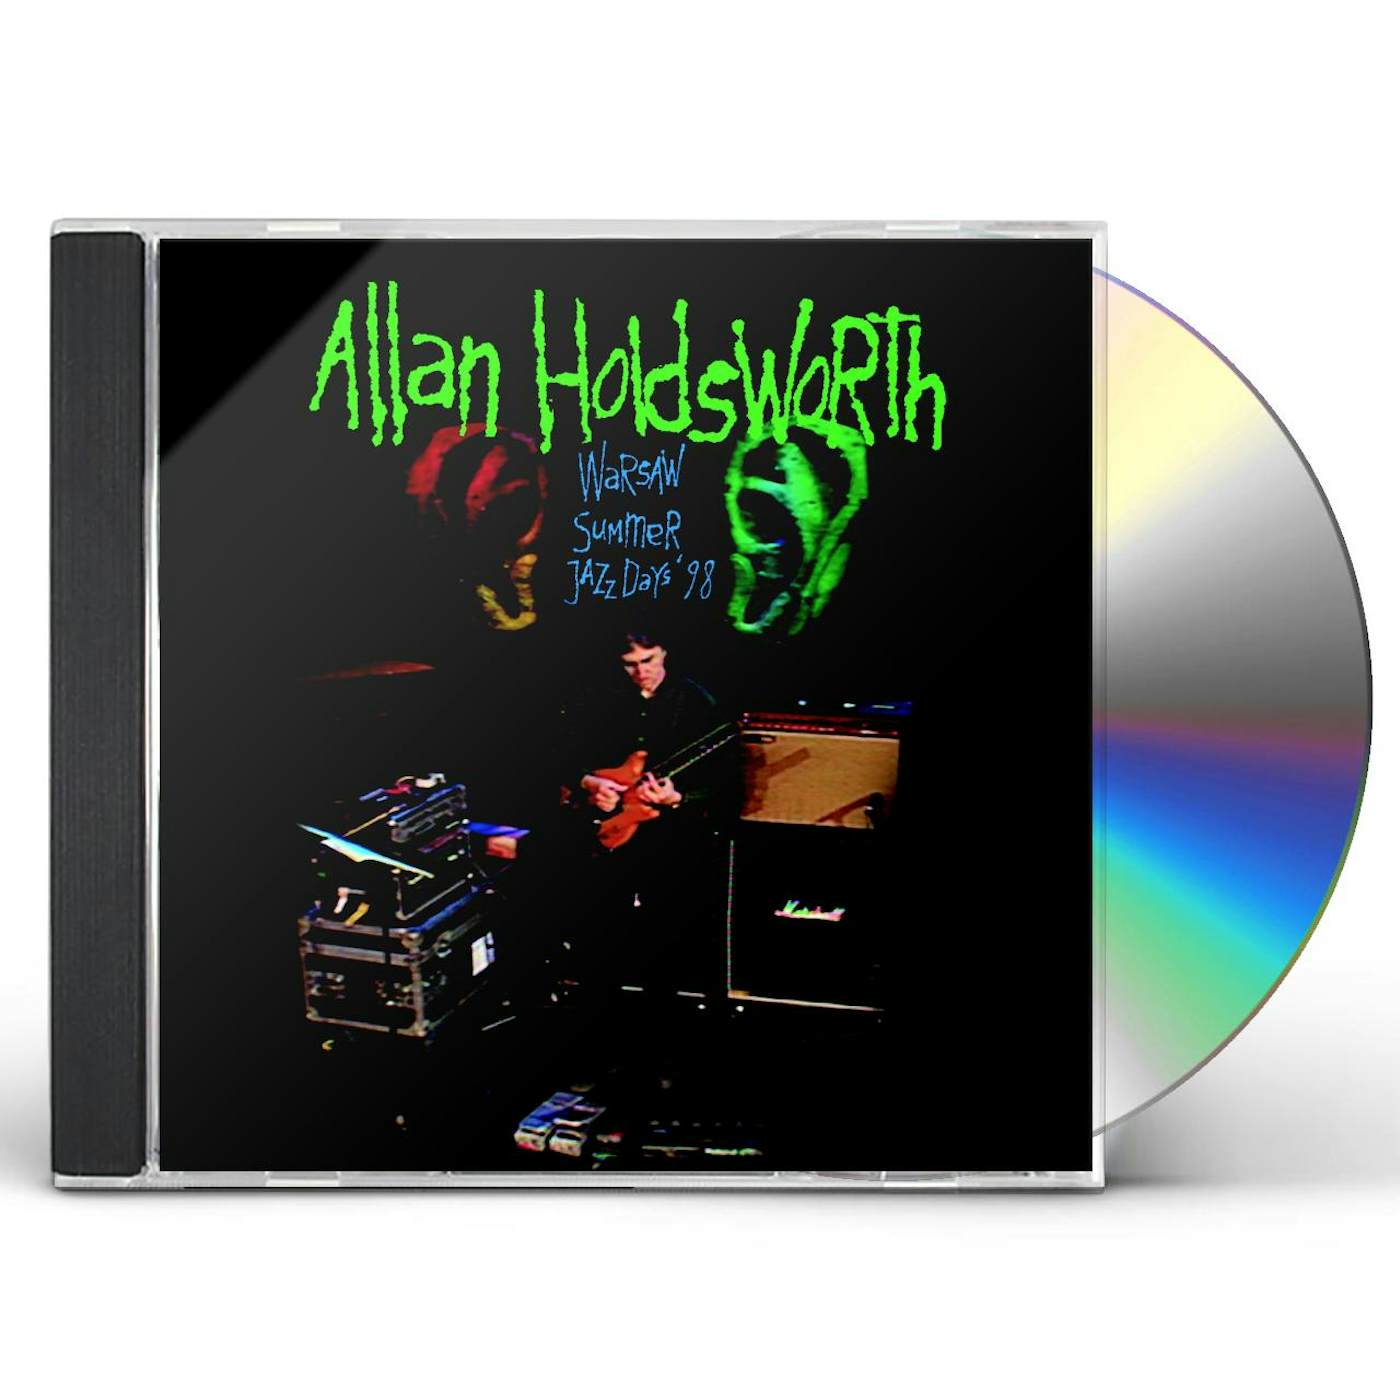 Allan Holdsworth WARSAW SUMMER JAZZ DAYS '98 CD